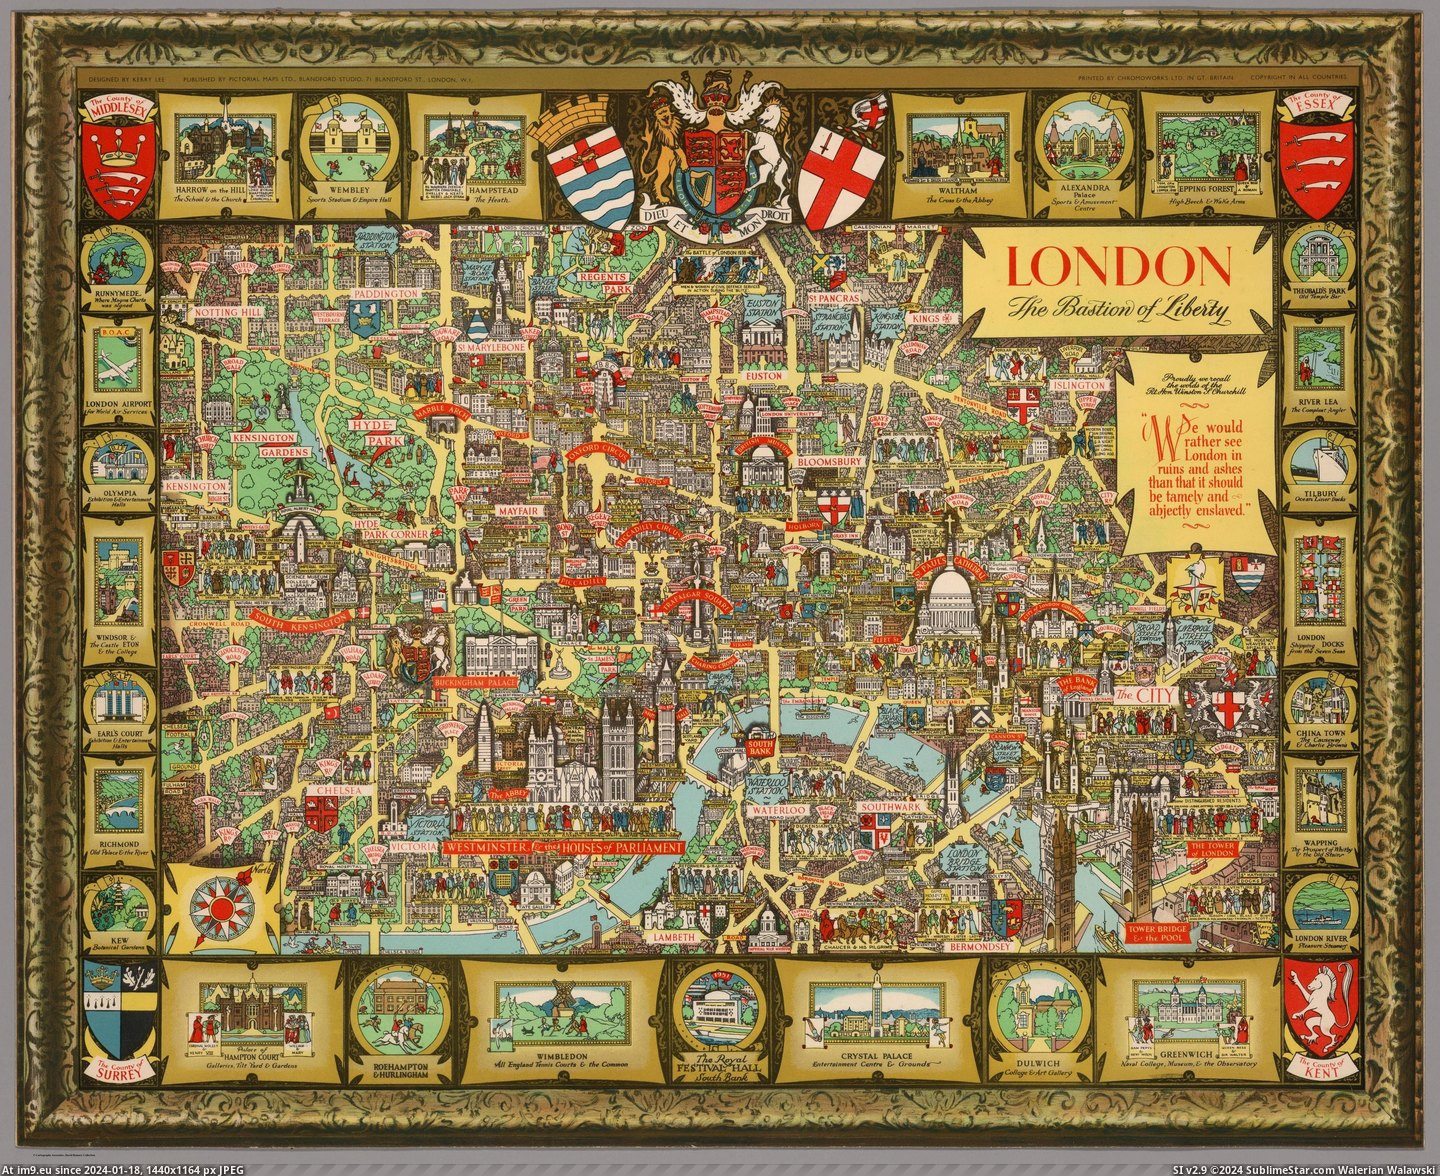 #London #Lee #Bastion #Kerry #Liberty [Mapporn] London the Bastion of Liberty, made by Kerry Lee (1947)[3686x2991] (London) Pic. (Bild von album My r/MAPS favs))